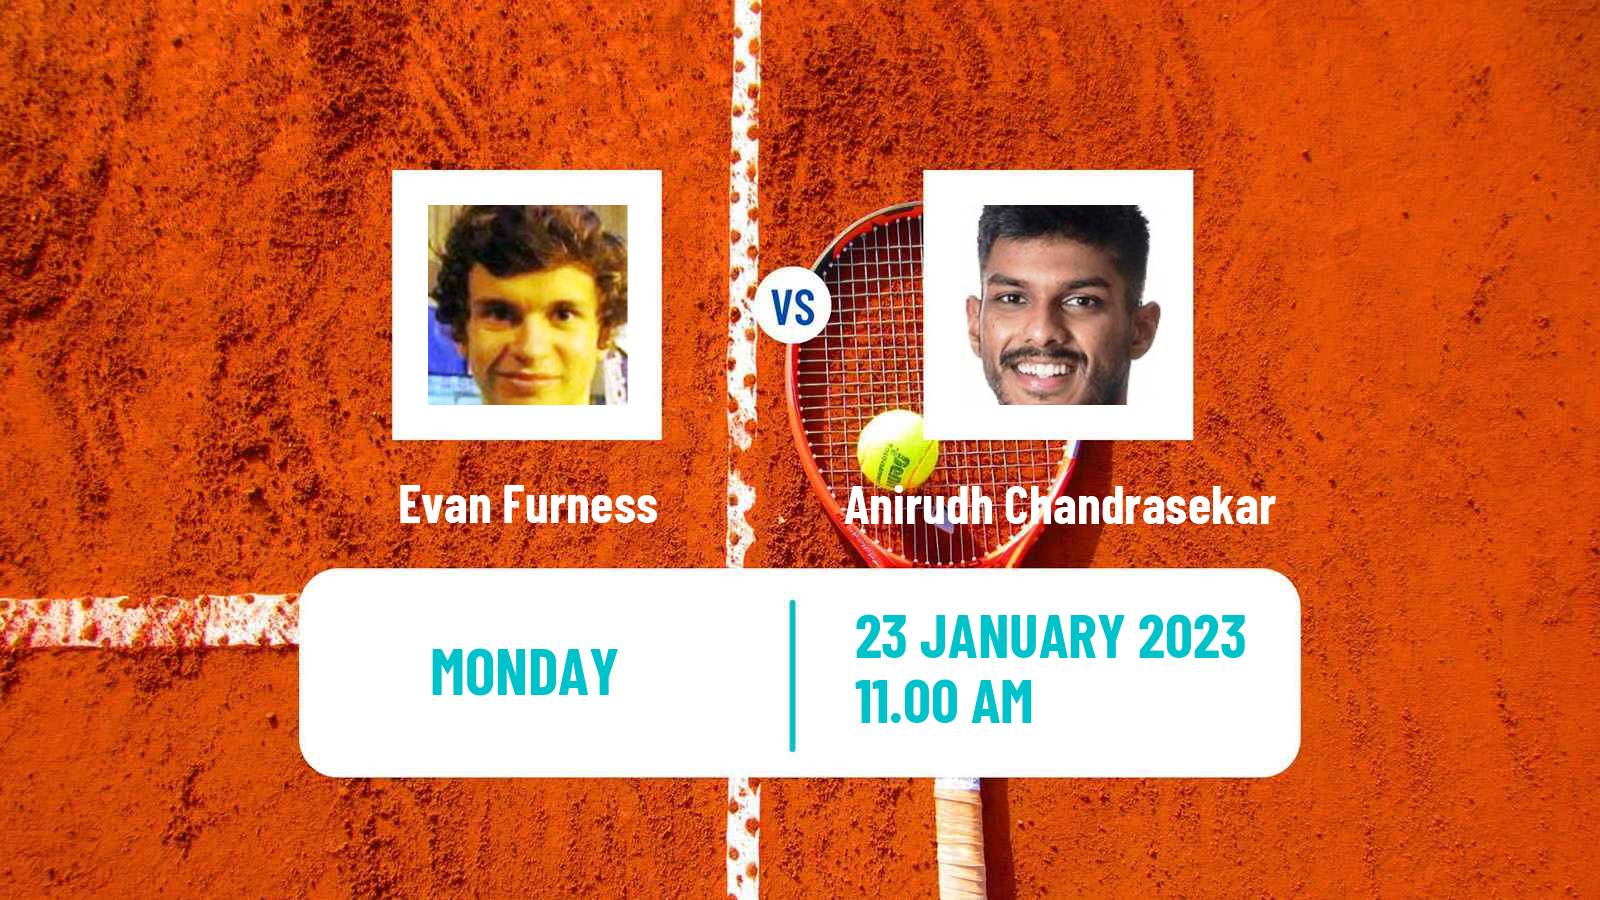 Tennis ATP Challenger Evan Furness - Anirudh Chandrasekar